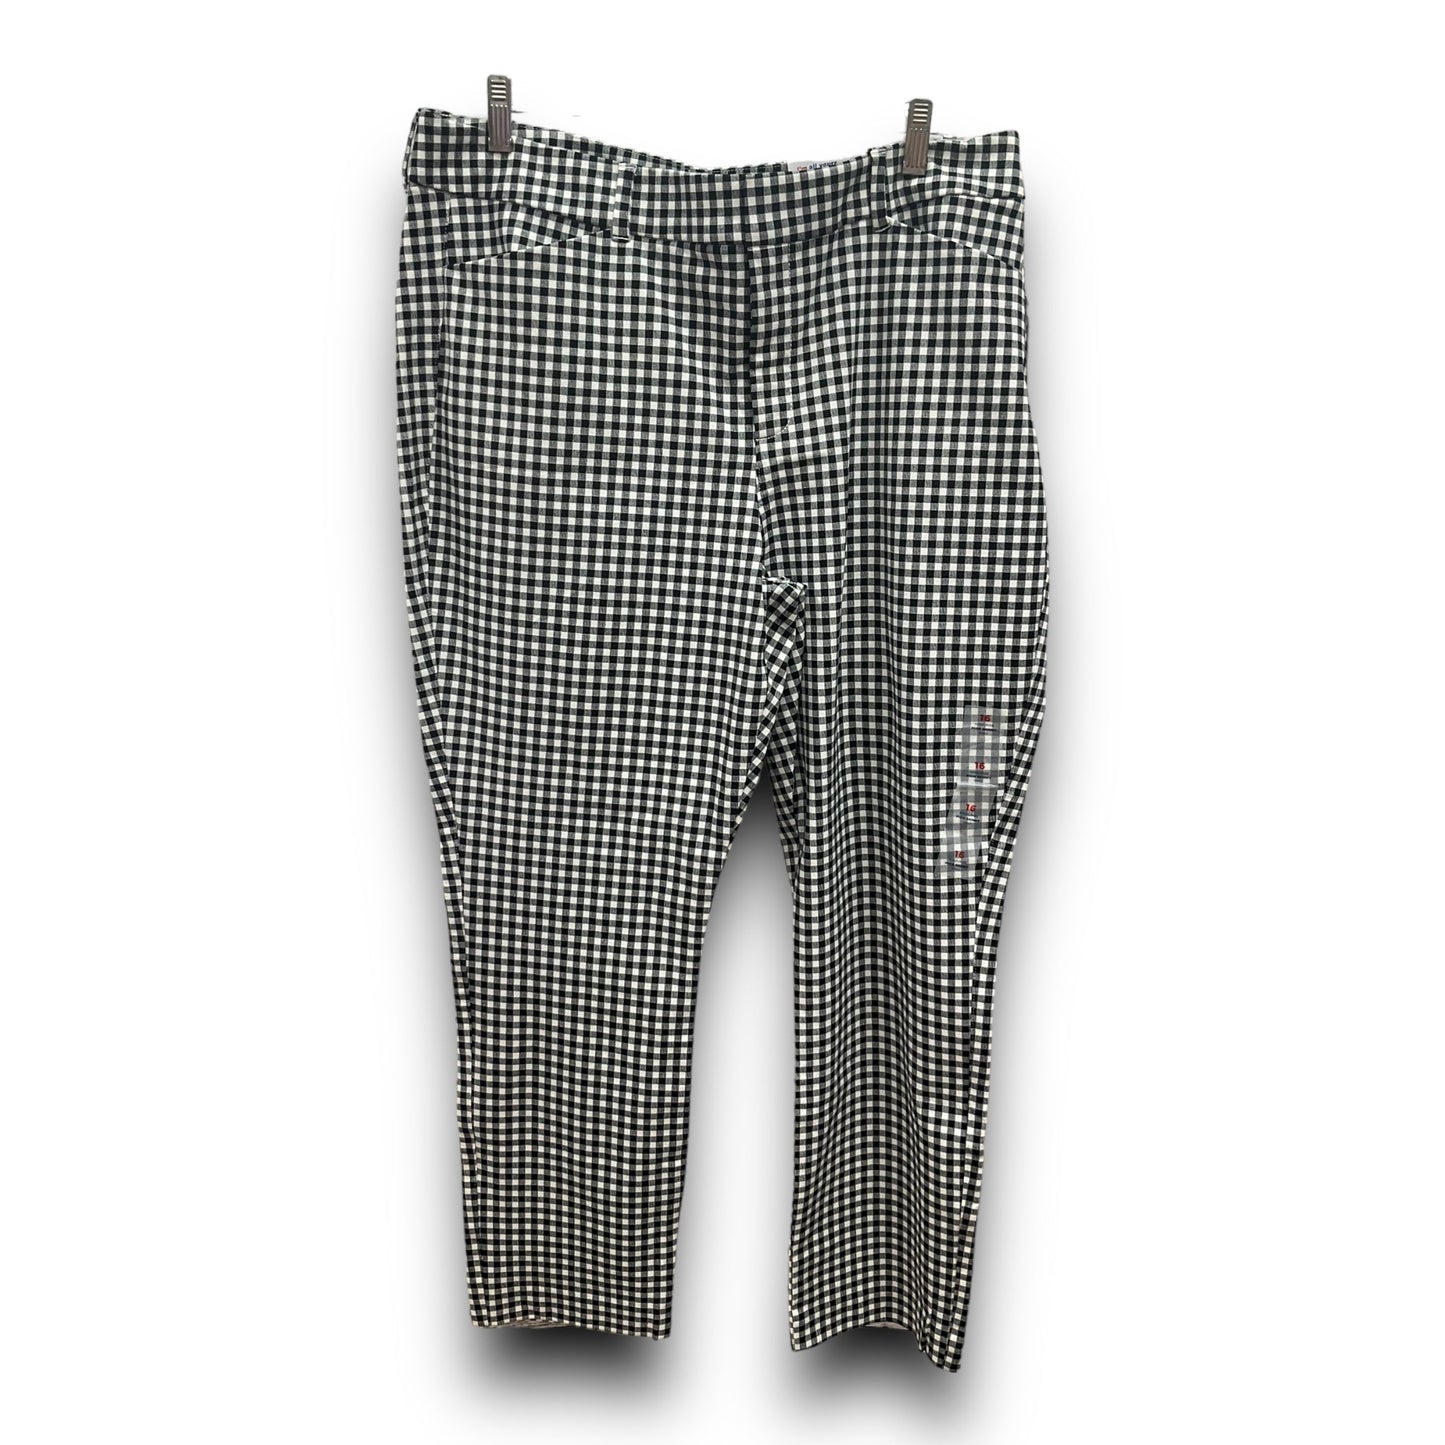 Checkered Pattern Pants Dress Old Navy, Size 16